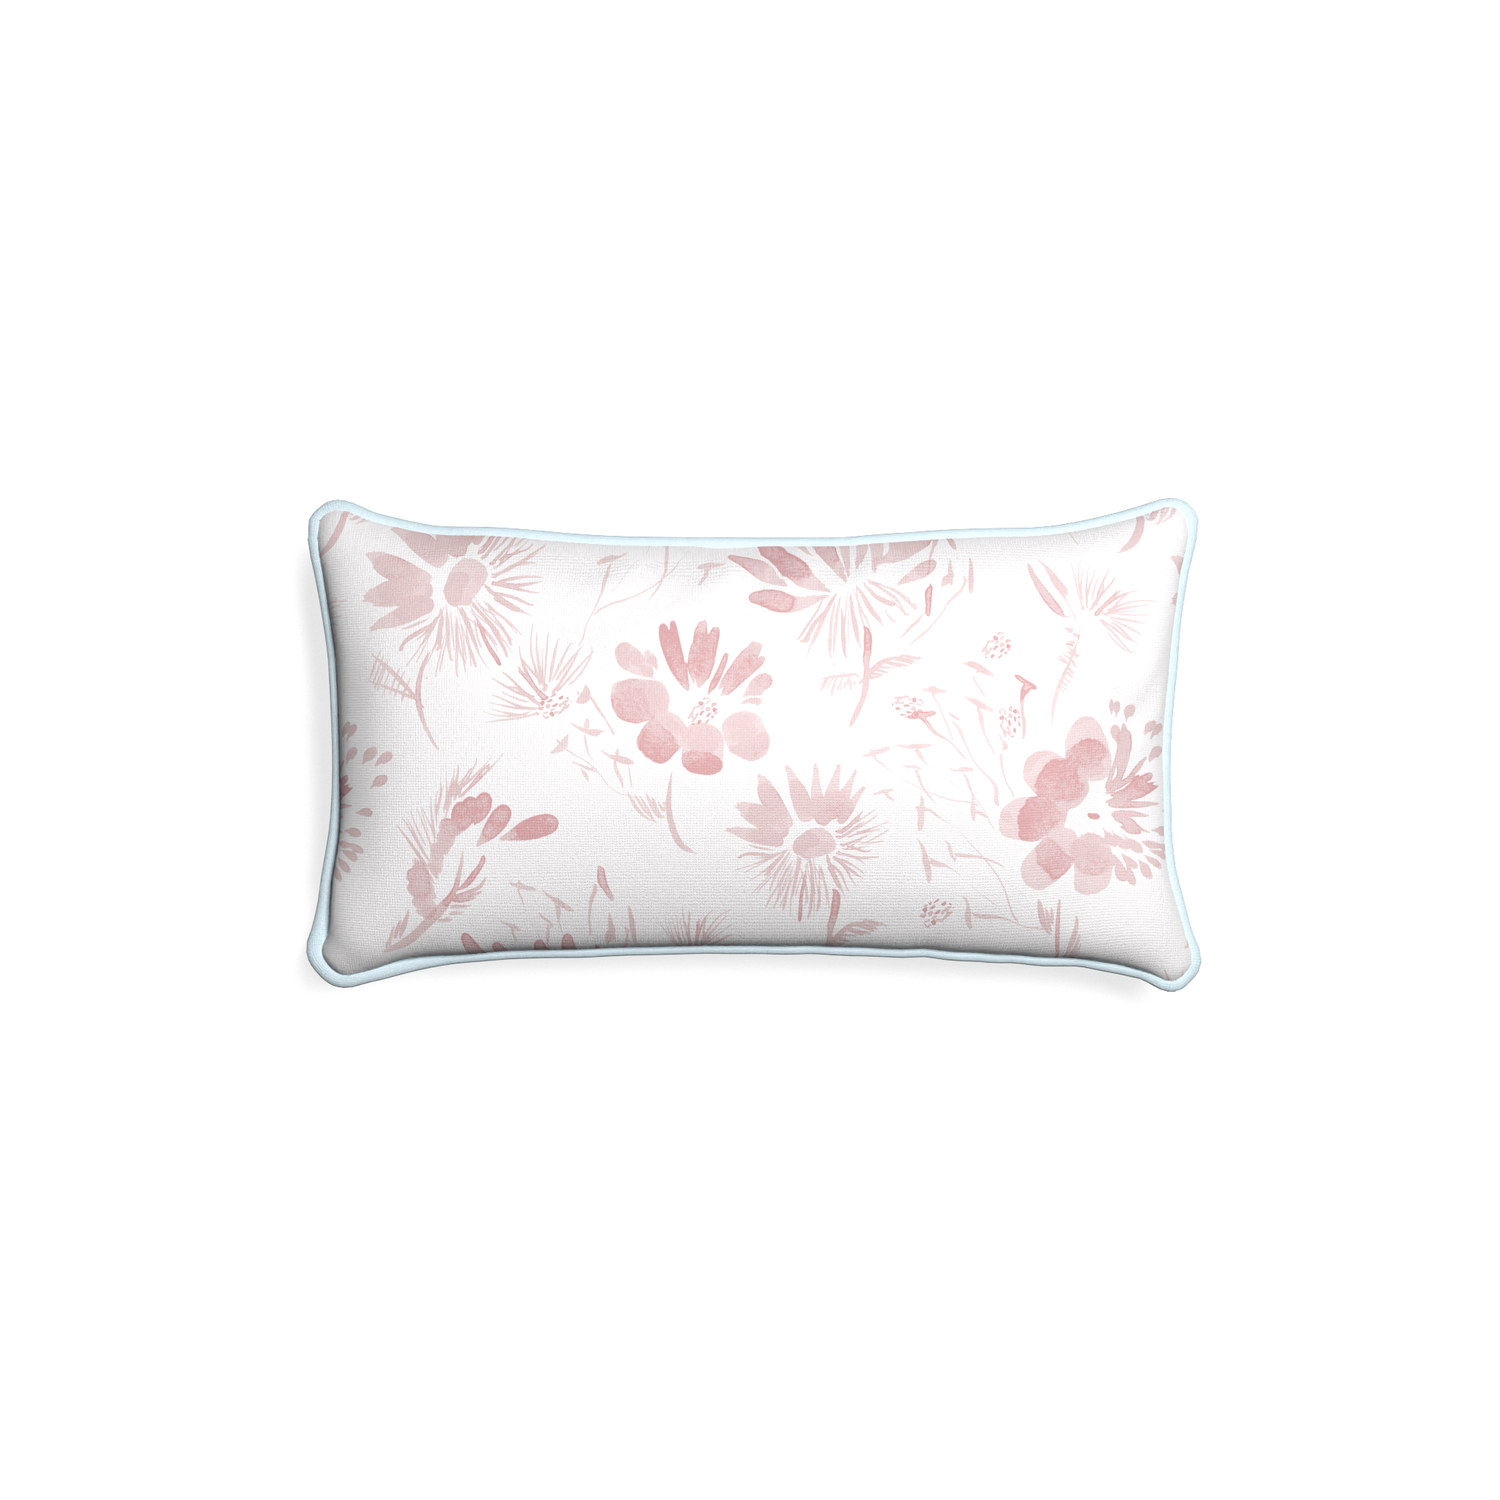 Petite-lumbar blake custom pink floralpillow with powder piping on white background